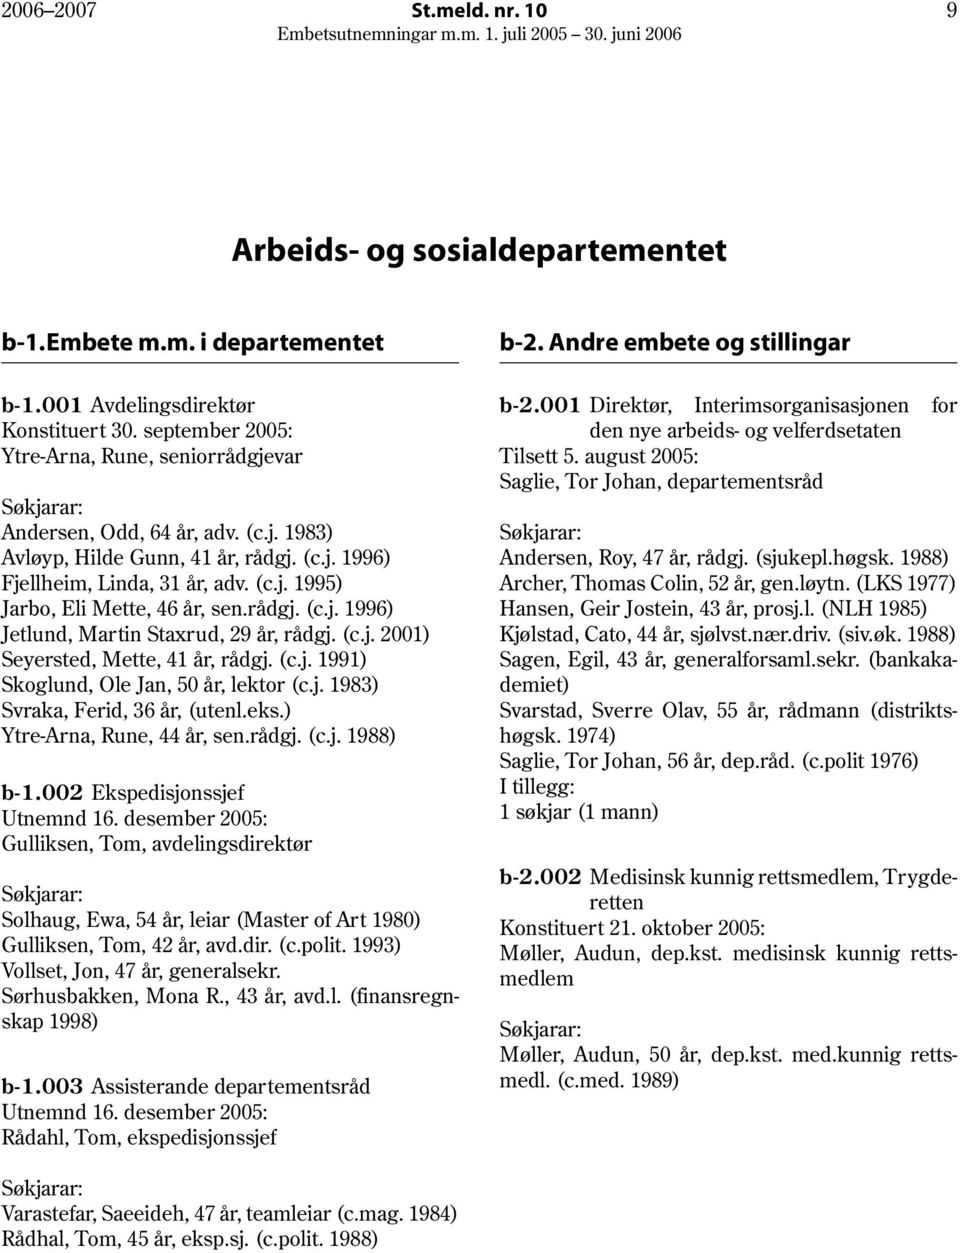 rådgj. (c.j. 1996) Jetlund, Martin Staxrud, 29 år, rådgj. (c.j. 2001) Seyersted, Mette, 41 år, rådgj. (c.j. 1991) Skoglund, Ole Jan, 50 år, lektor (c.j. 1983) Svraka, Ferid, 36 år, (utenl.eks.